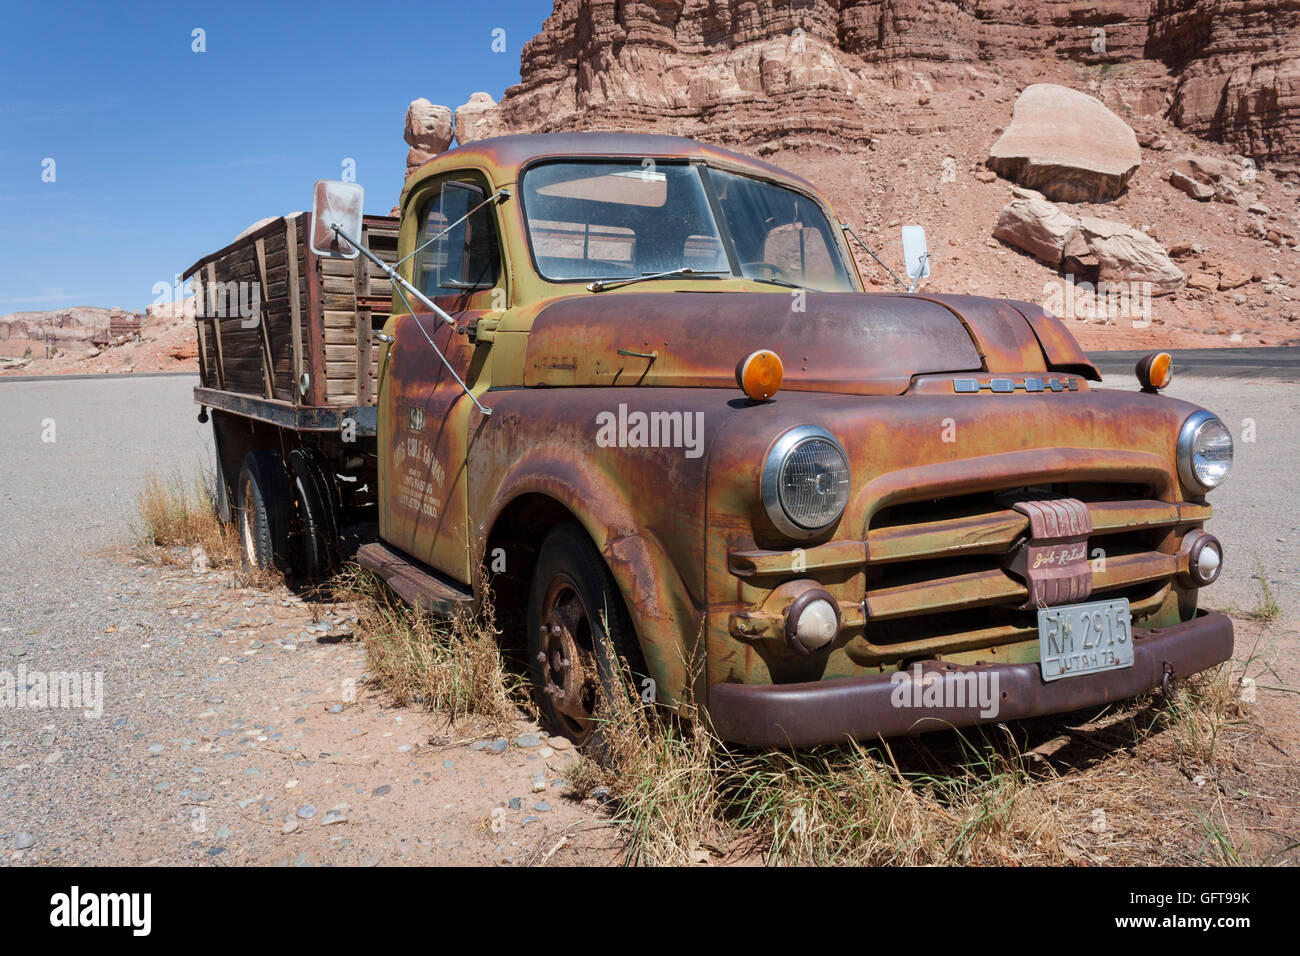 Job rated truck fotografías e imágenes de alta resolución - Alamy